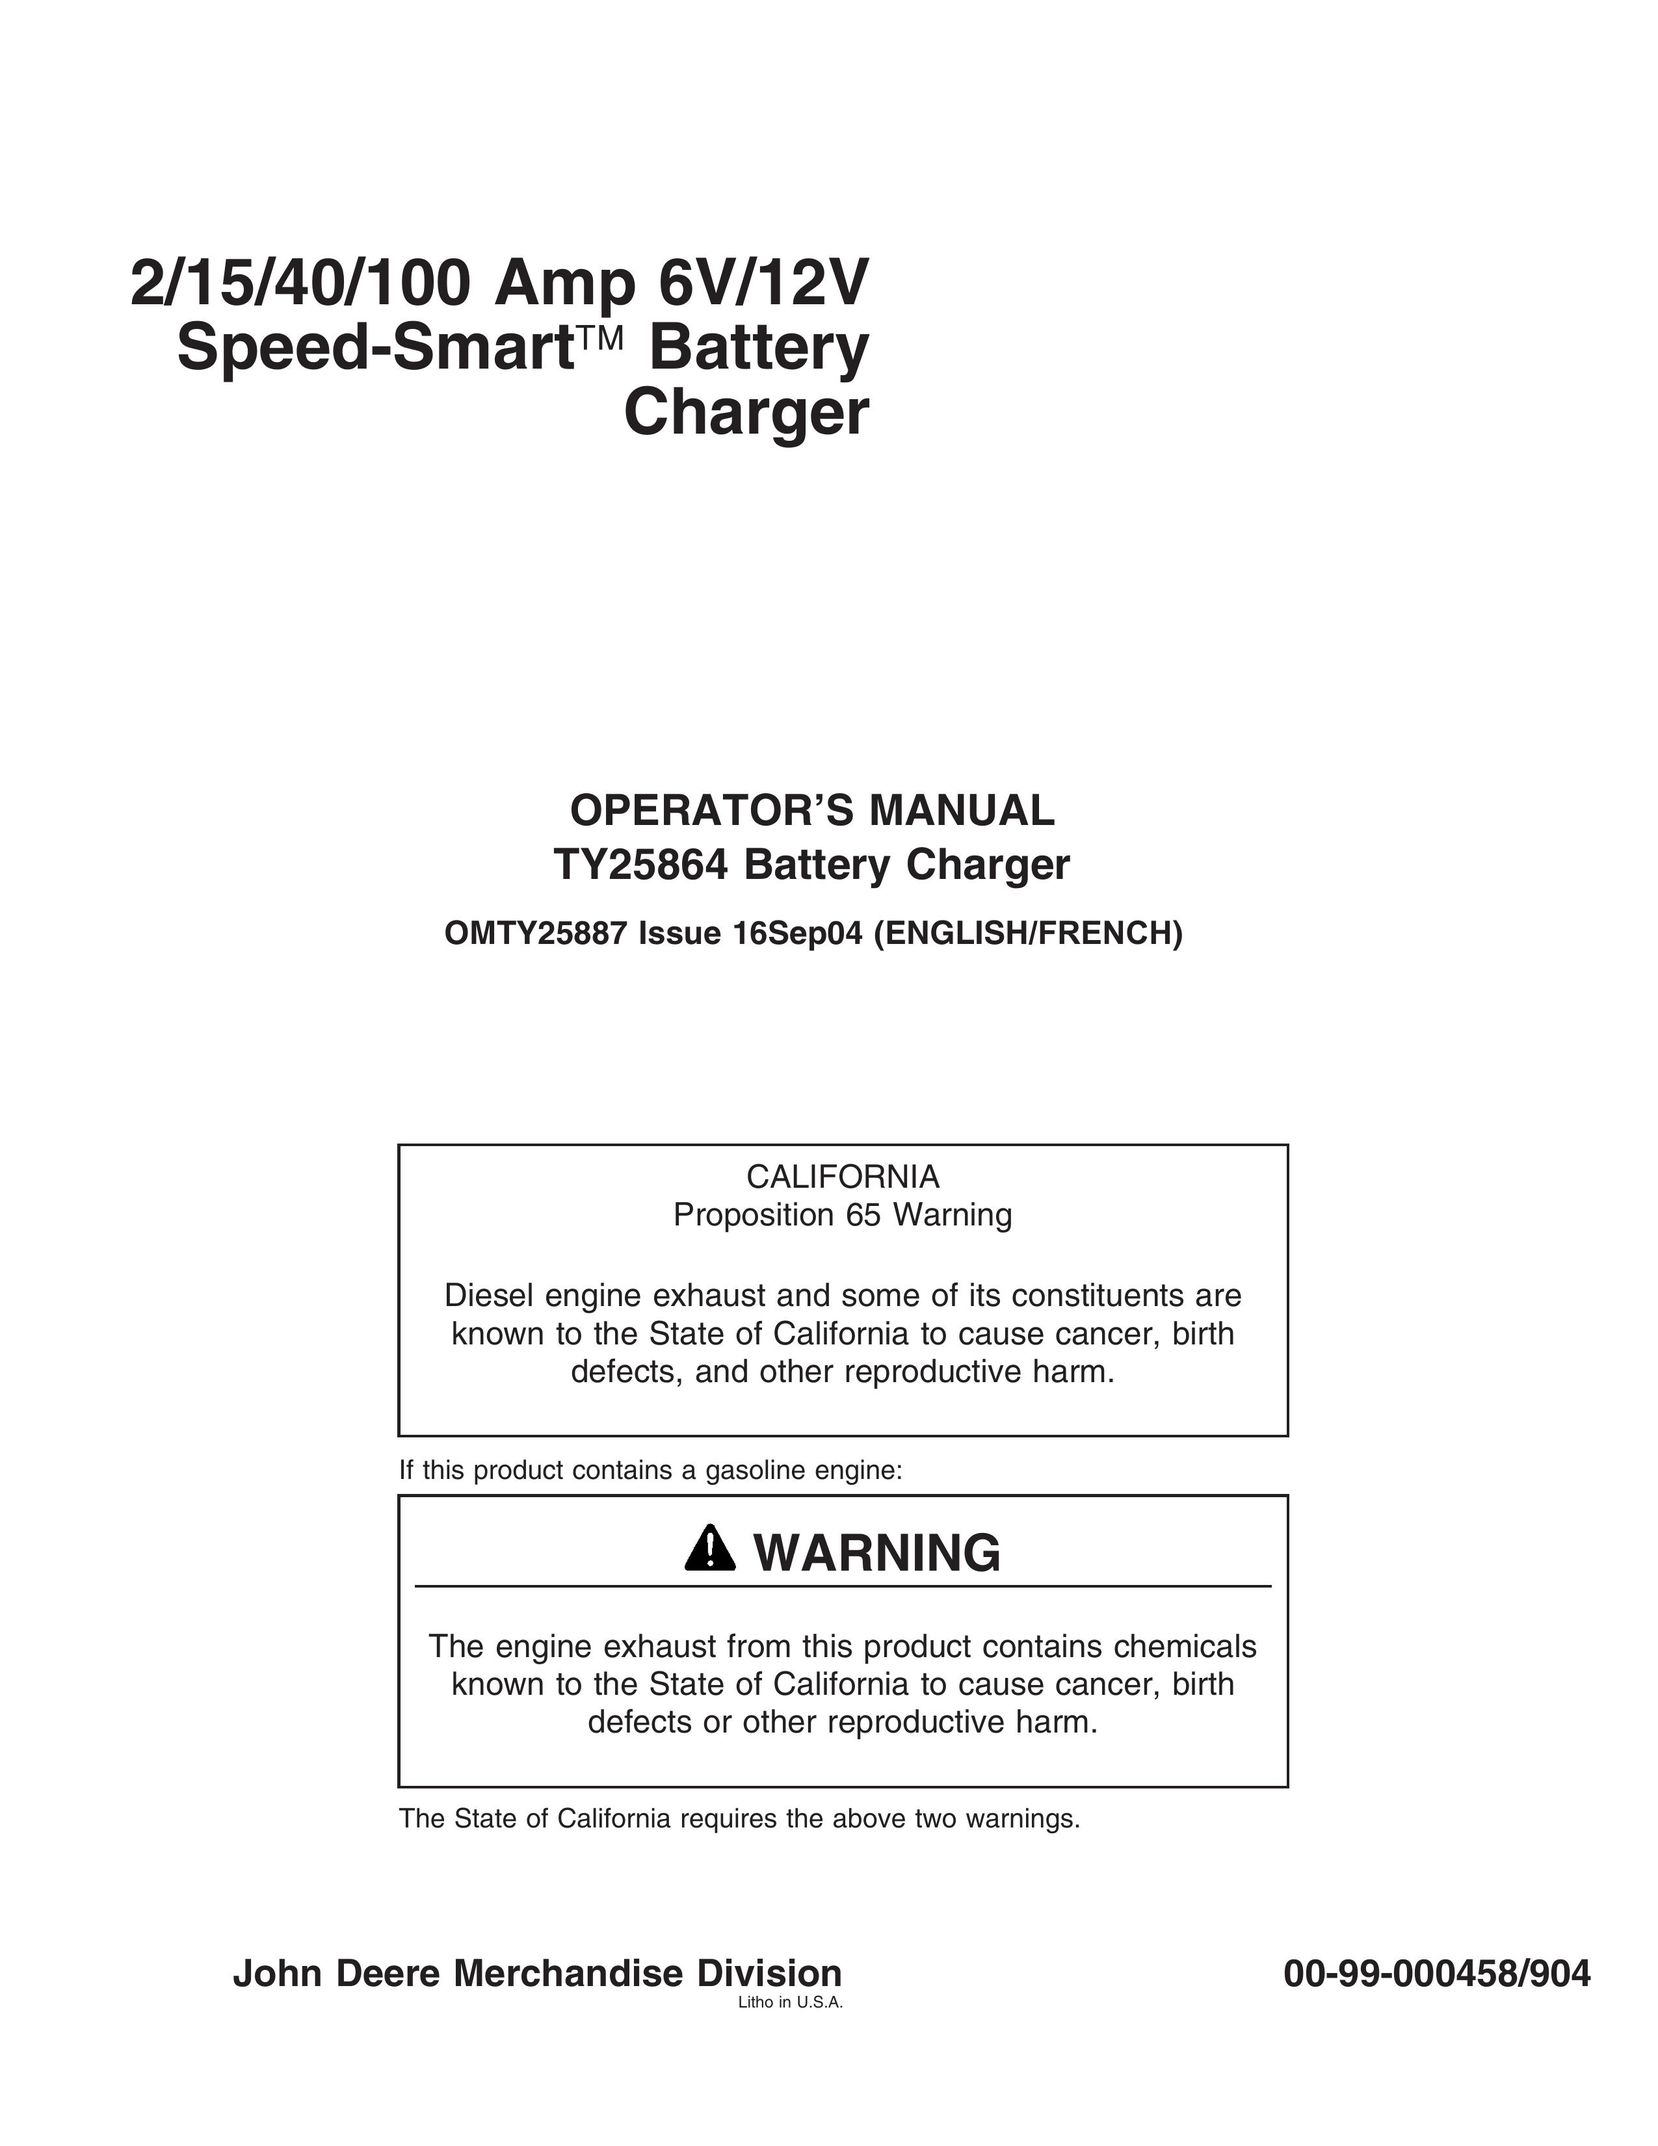 John Deere TY25864 Battery Charger User Manual